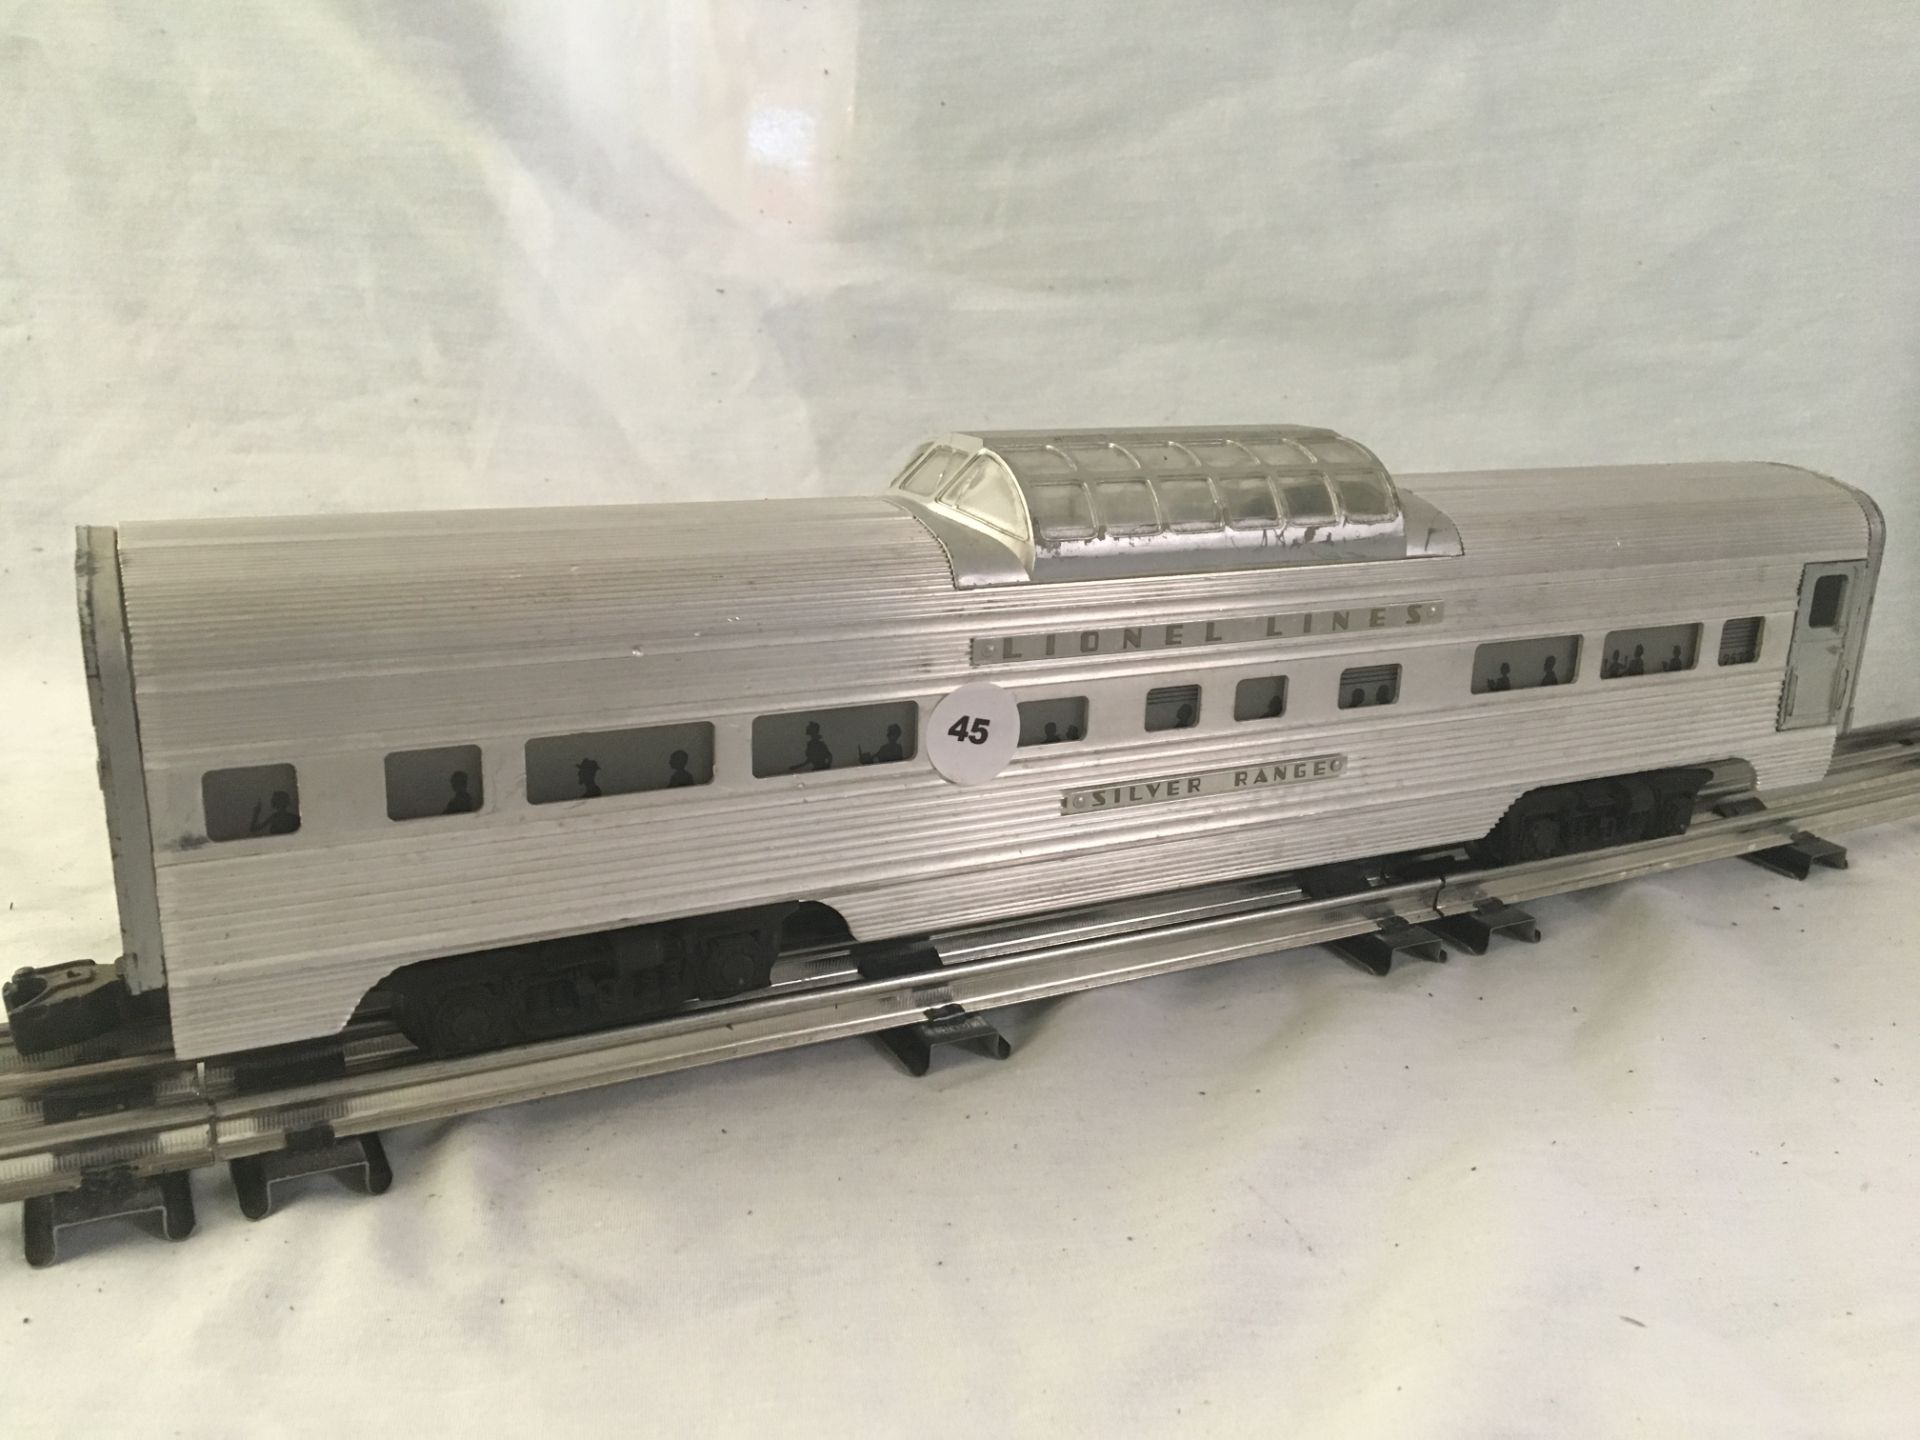 Lionel Lines #2532 'Silver Range' Passenger Car